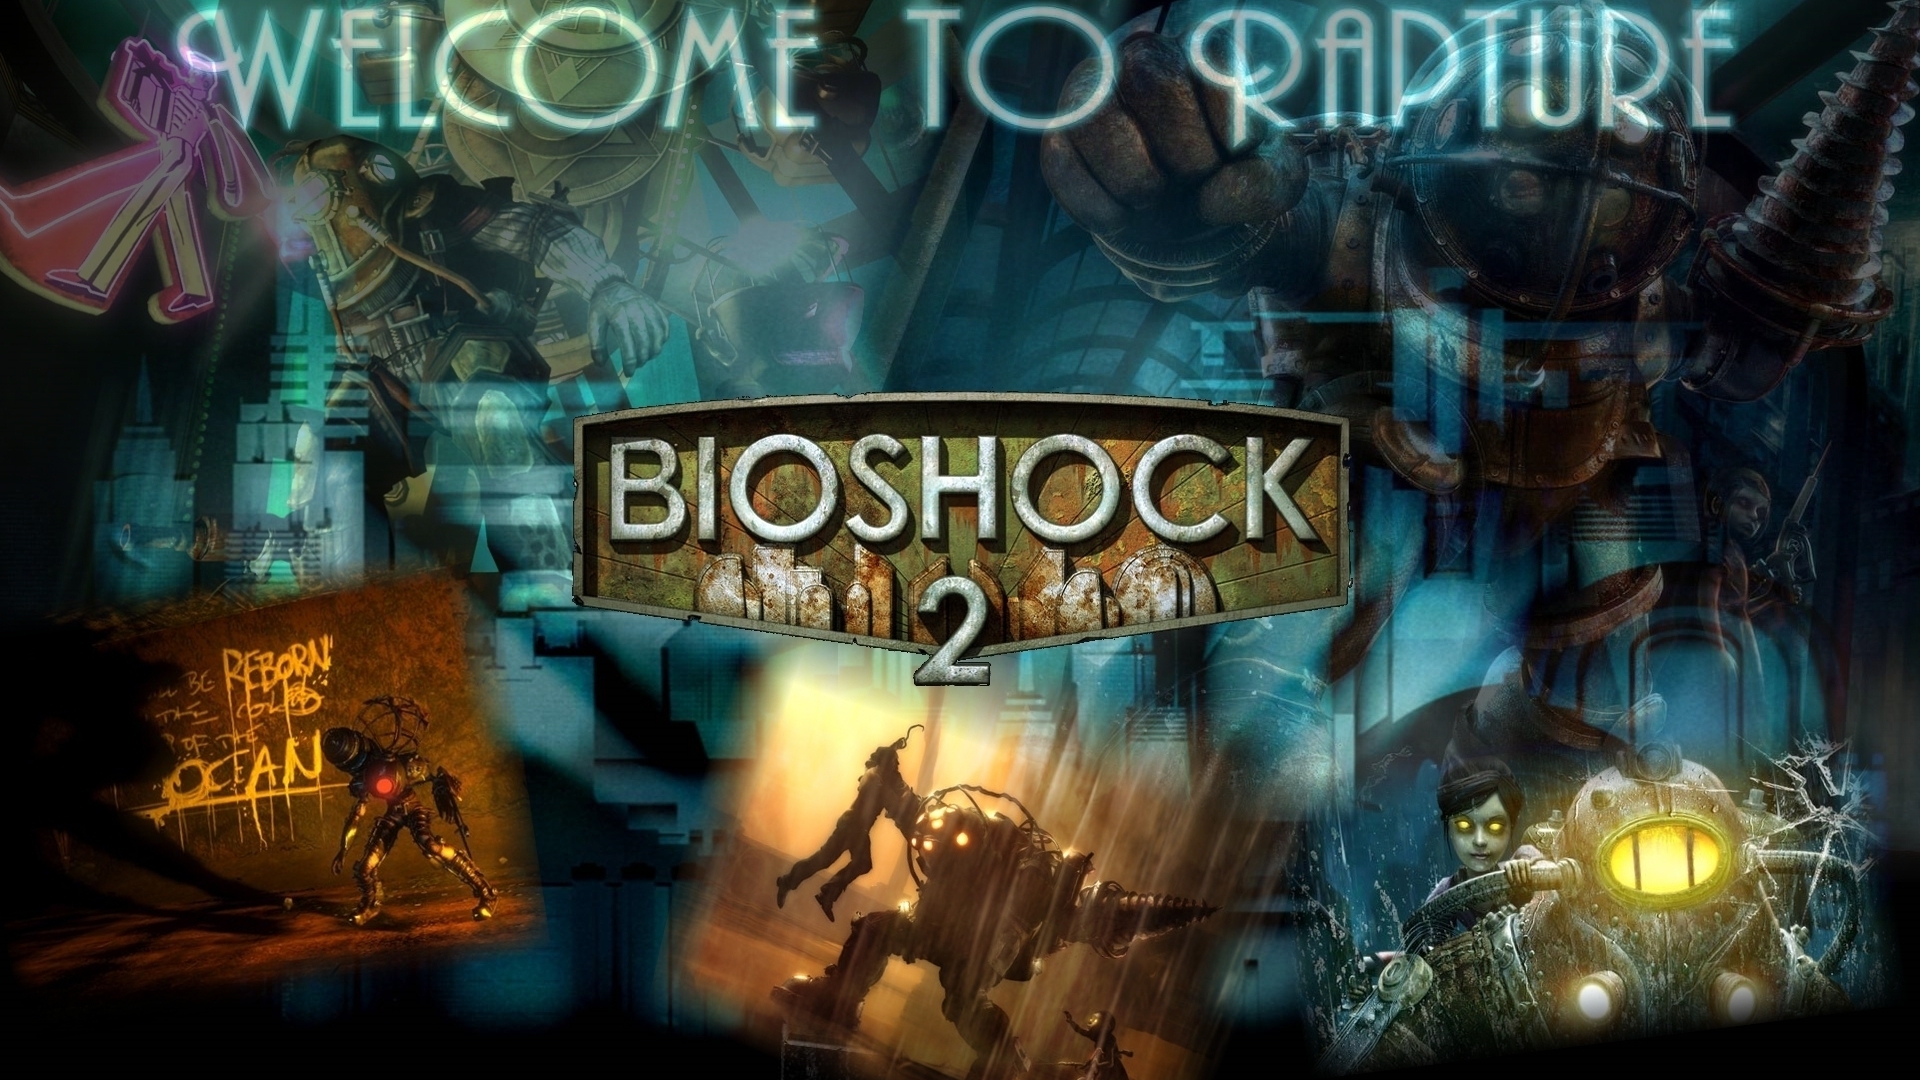 Bioshock 2 for 1920 x 1080 HDTV 1080p resolution